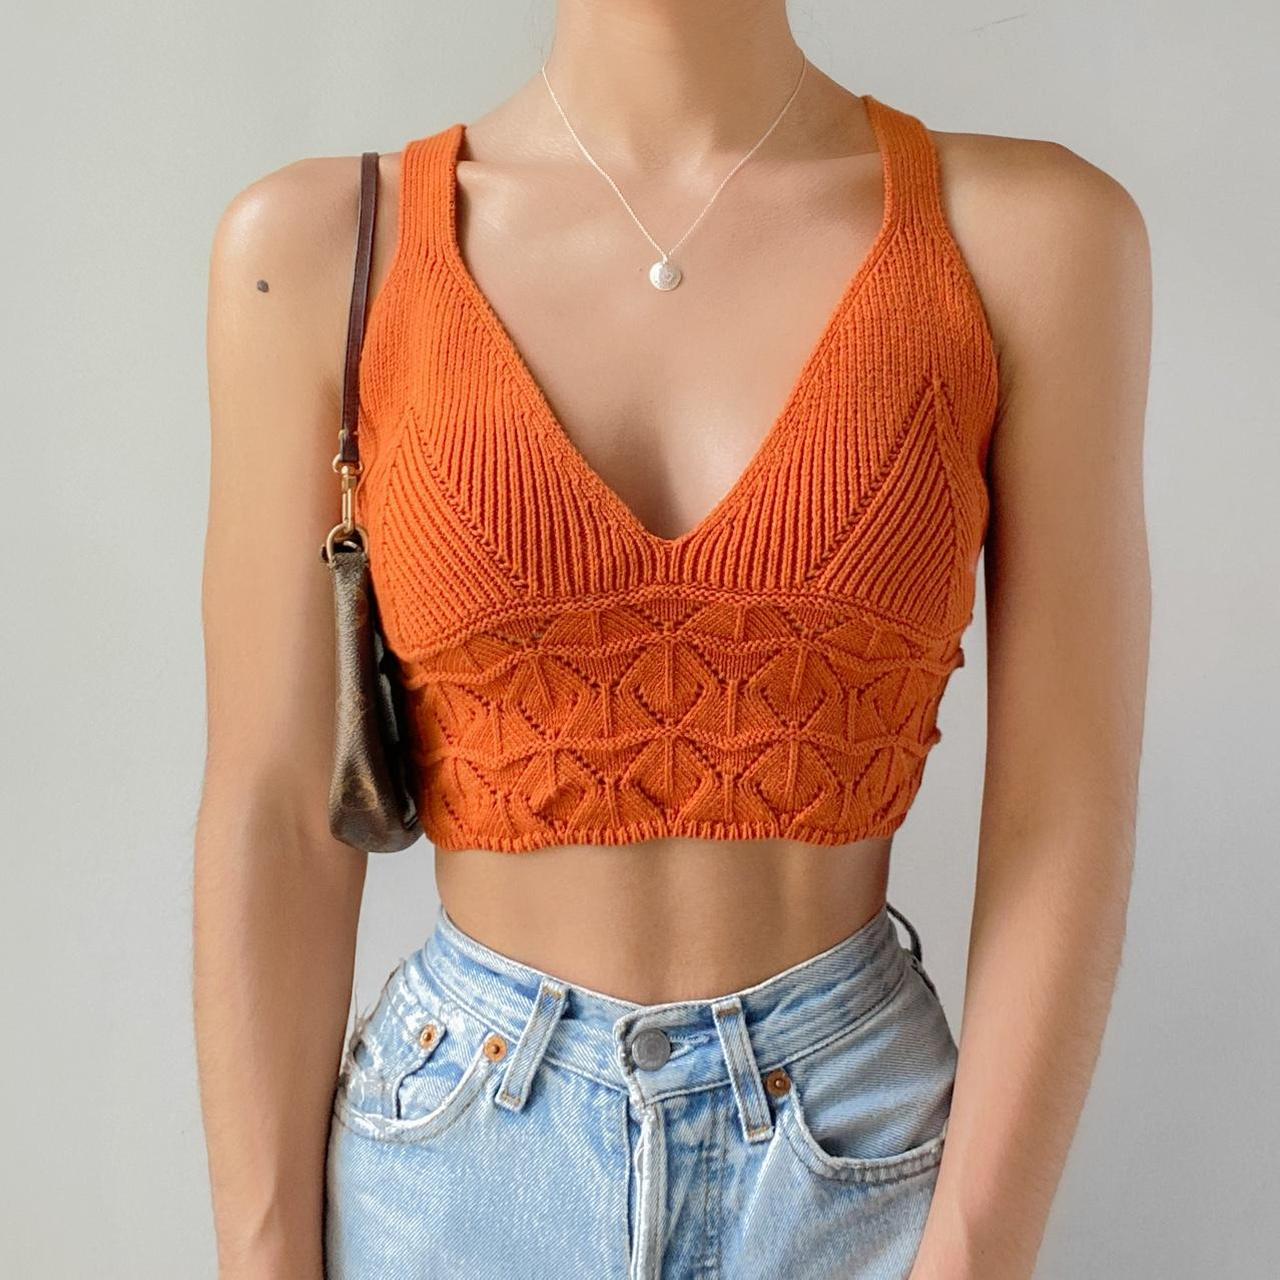 Free People - Textured Knit Orange Crop Tank Top - Depop